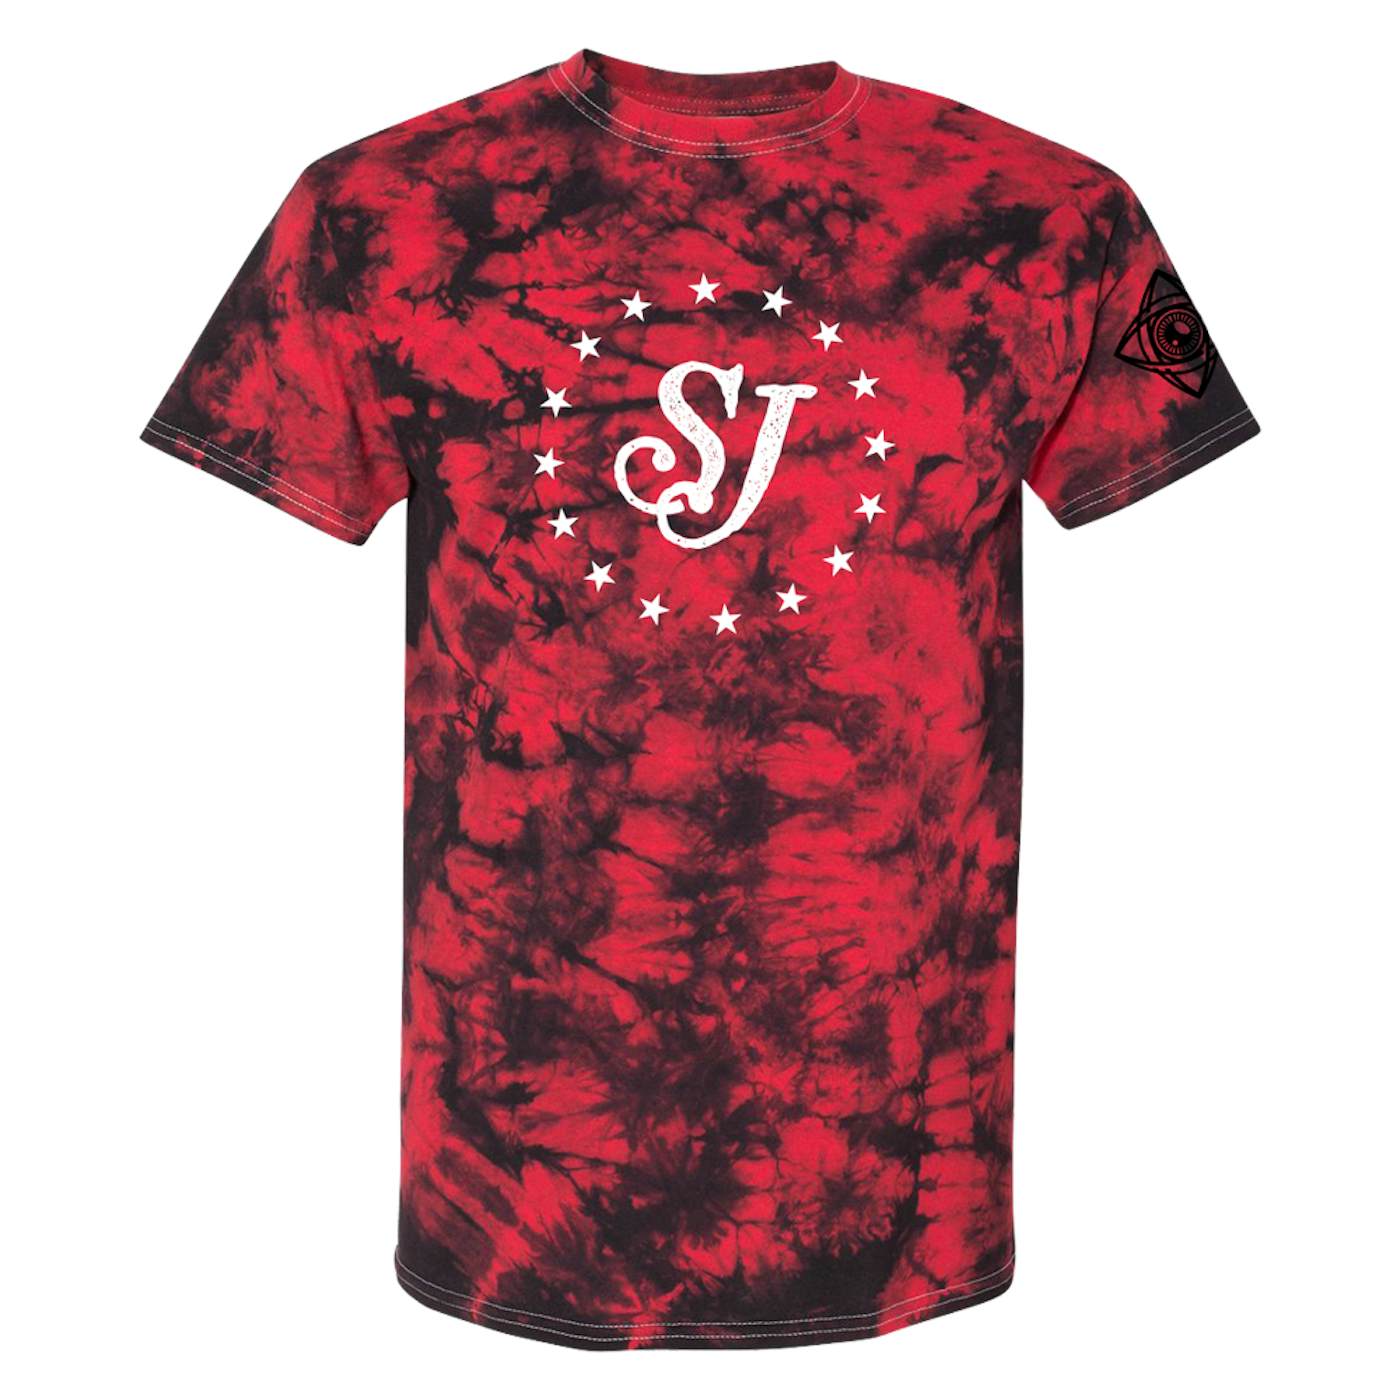 Shooter Jennings Stars & SJ Tie-Dye T-Shirt